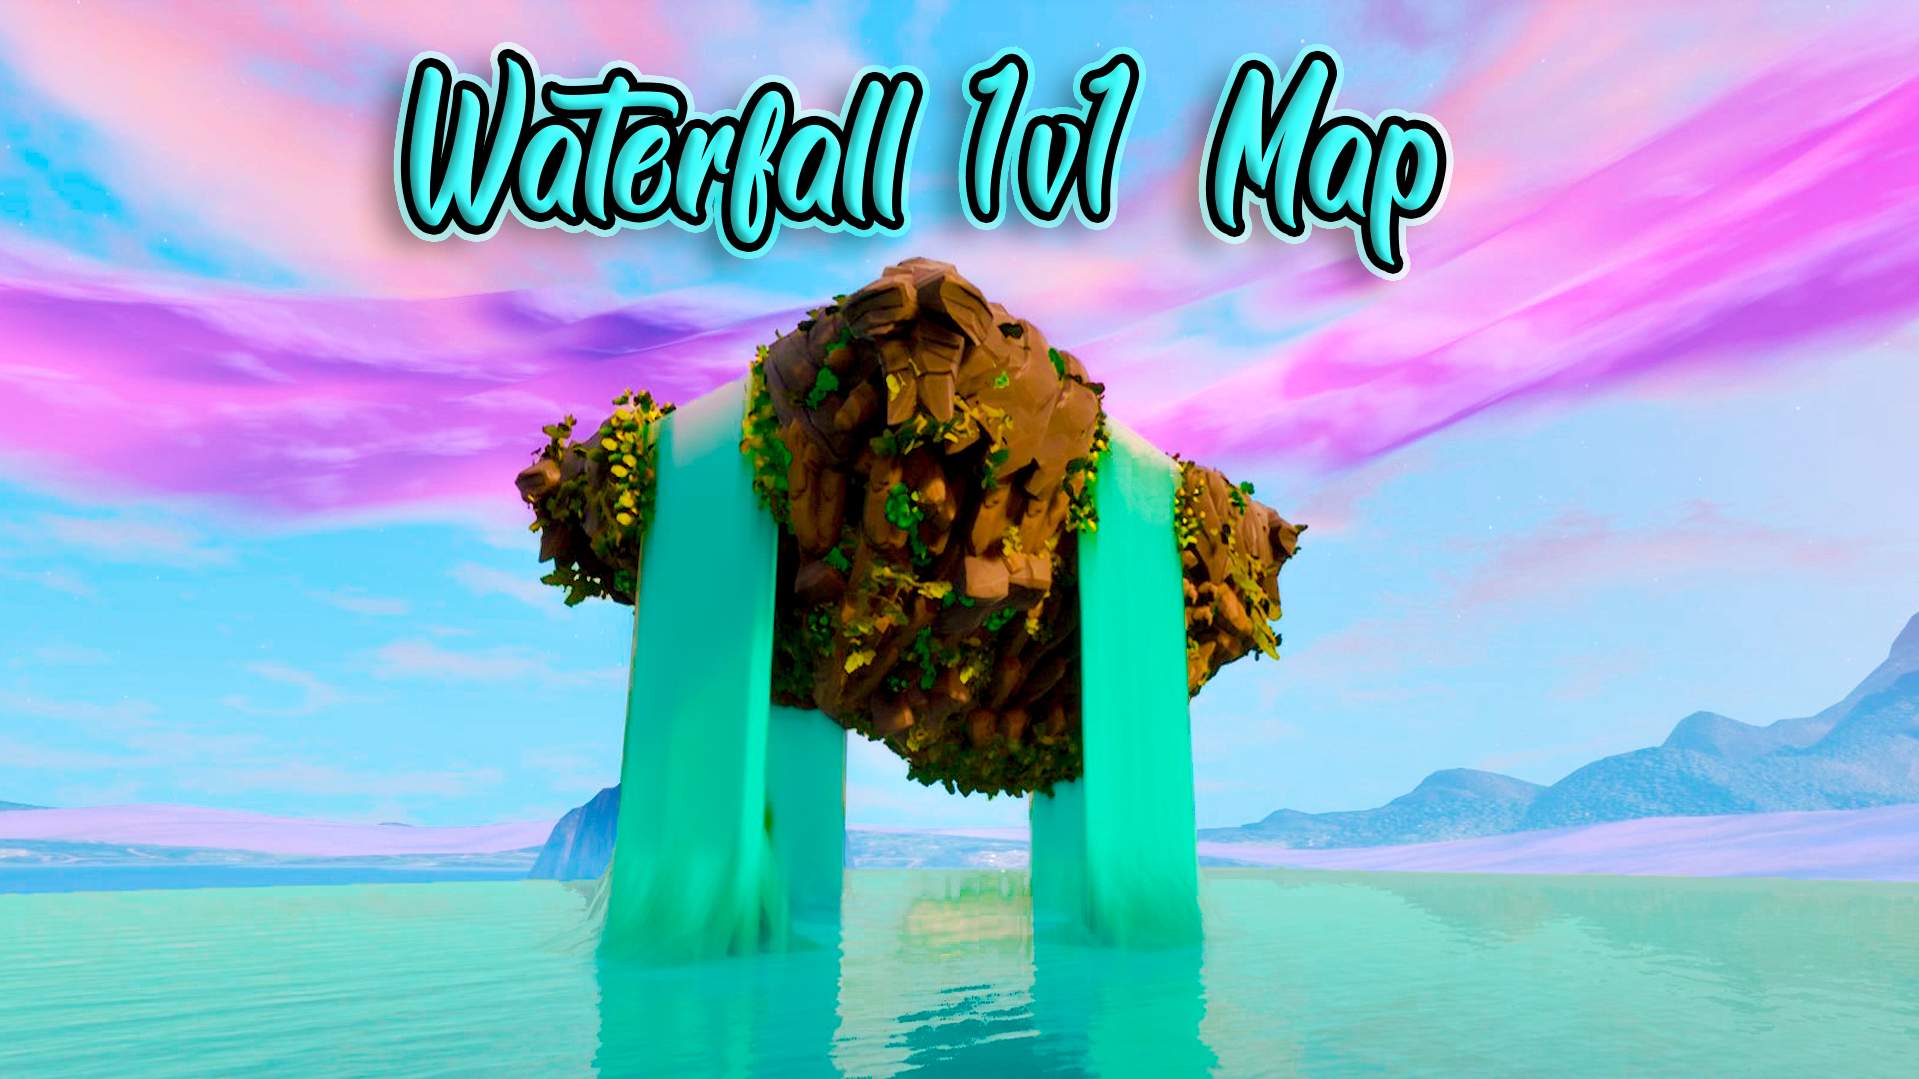 WATERFALL 1V1 MAP JFATIGUE ON